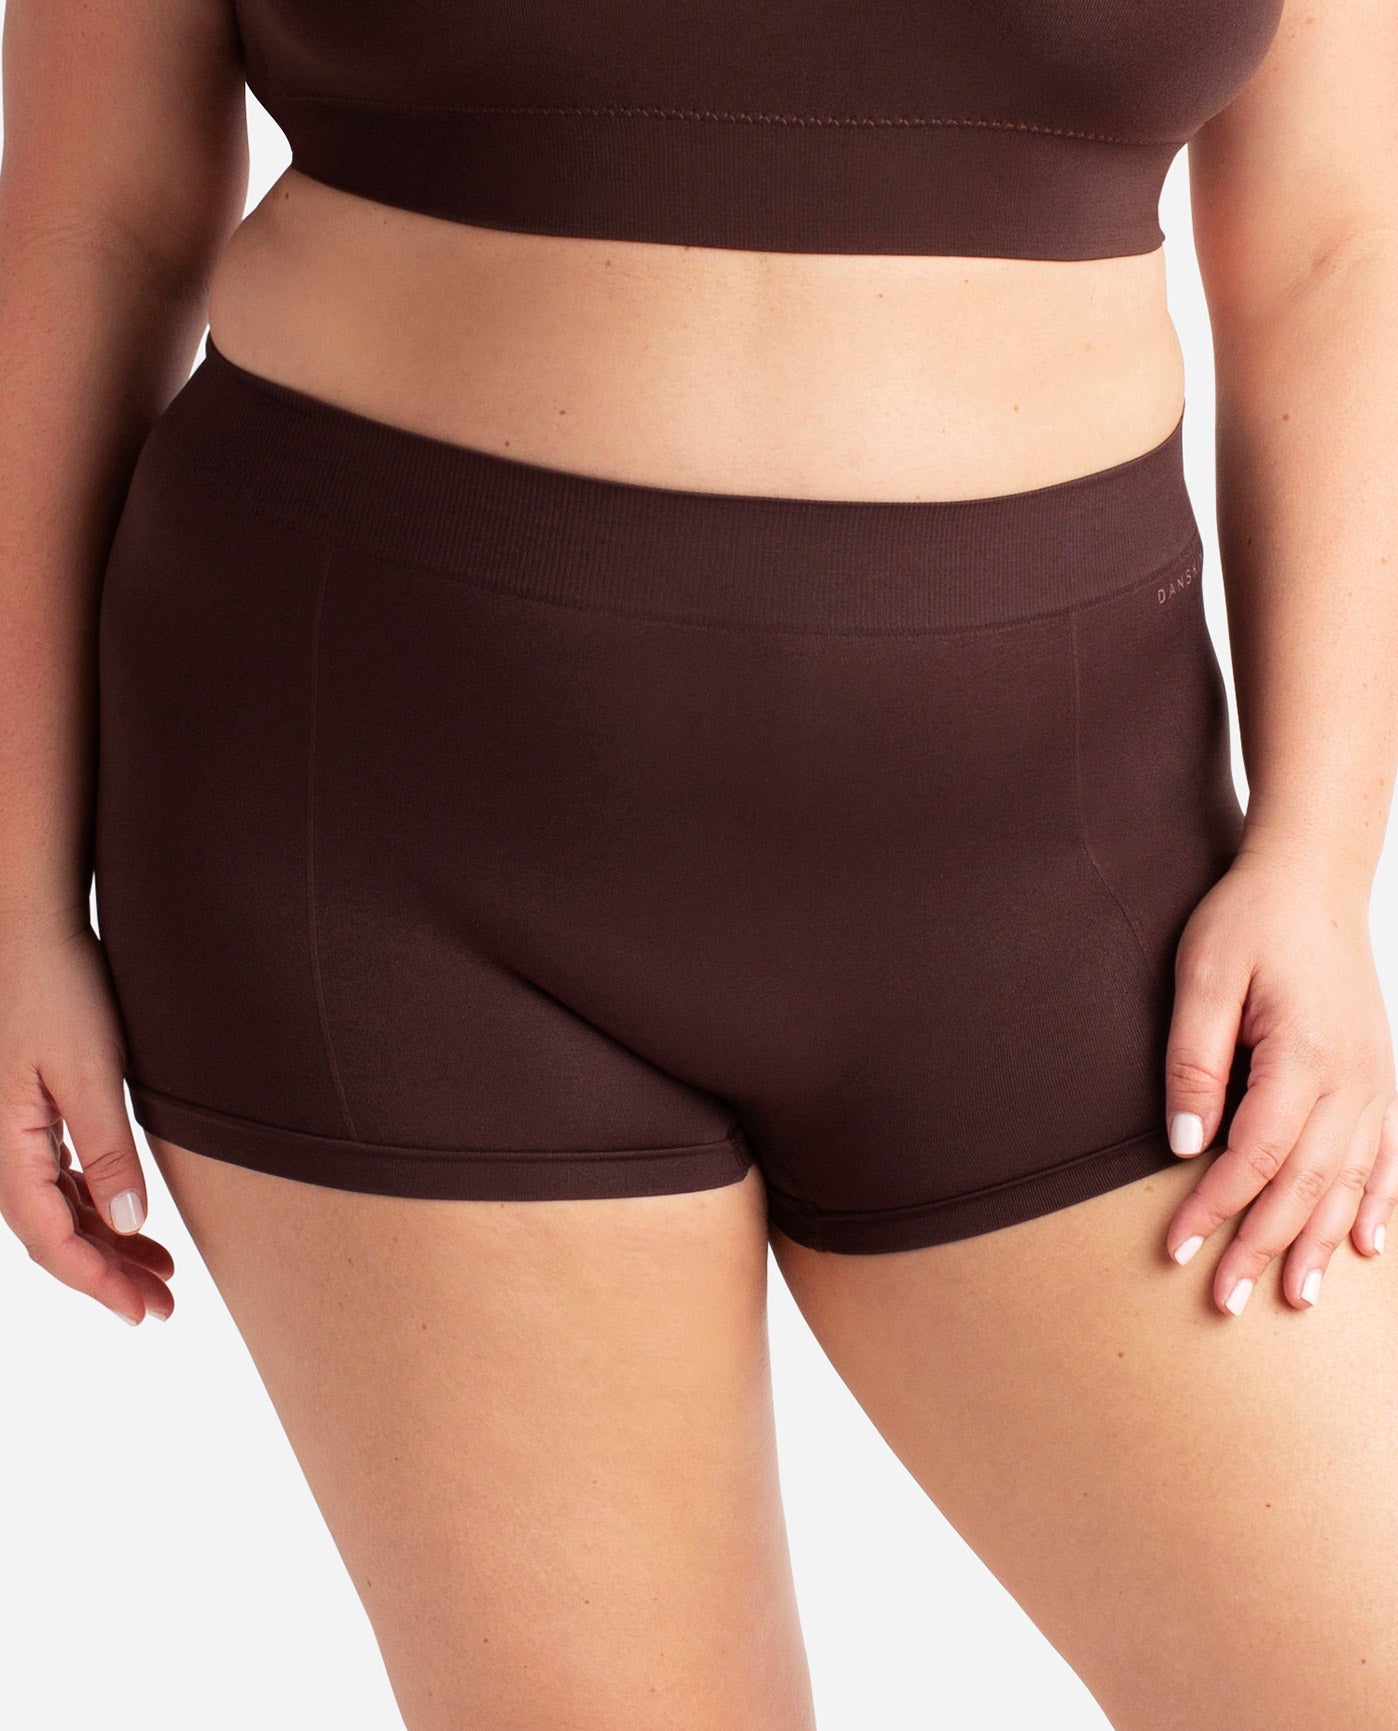 Kindly Yours Women's Seamless Boyshort Underwear 3-Pack, Sizes XS to XXXL 